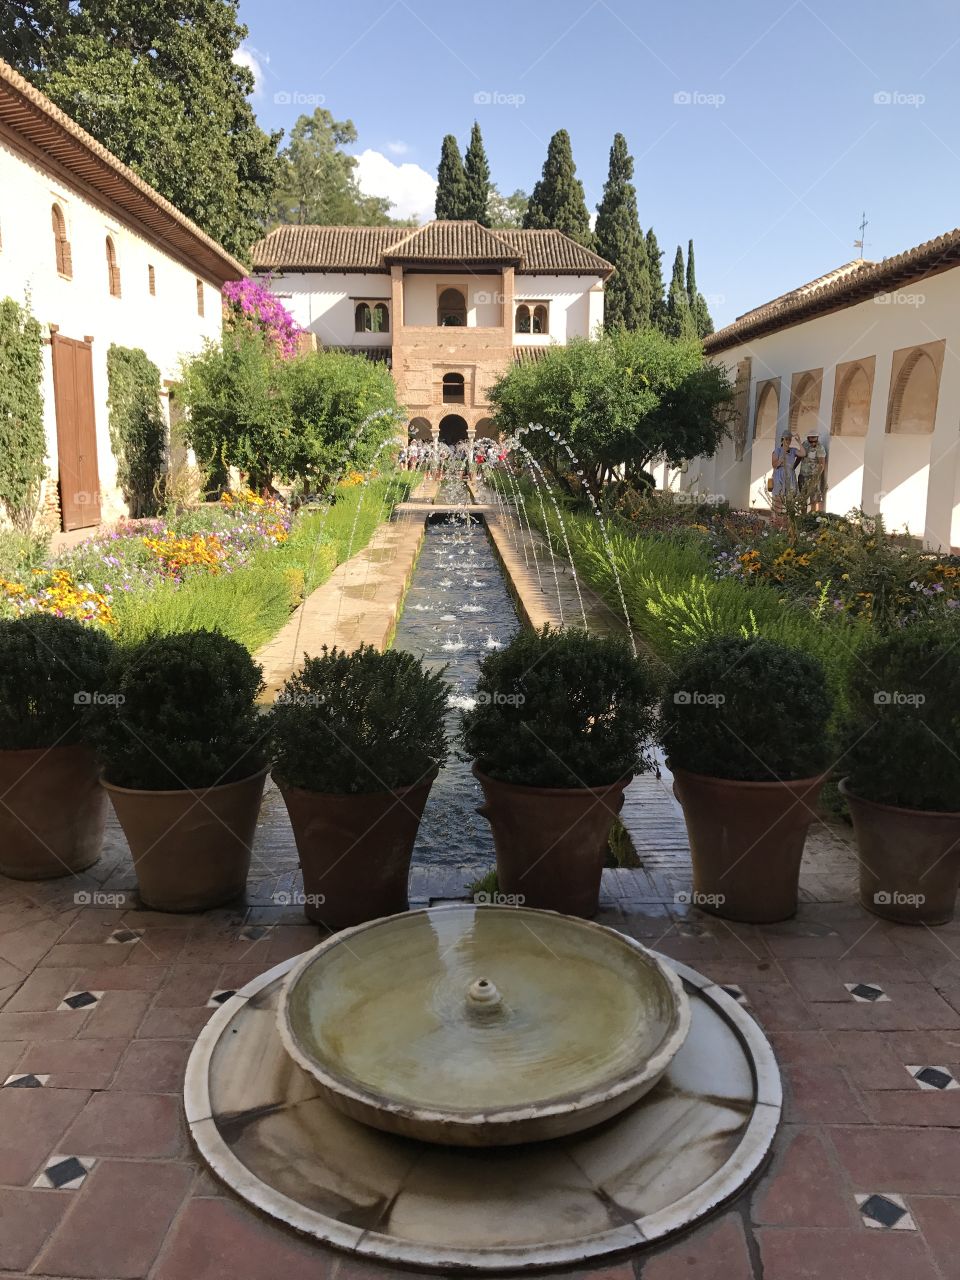 The Beautiful Alhambra!